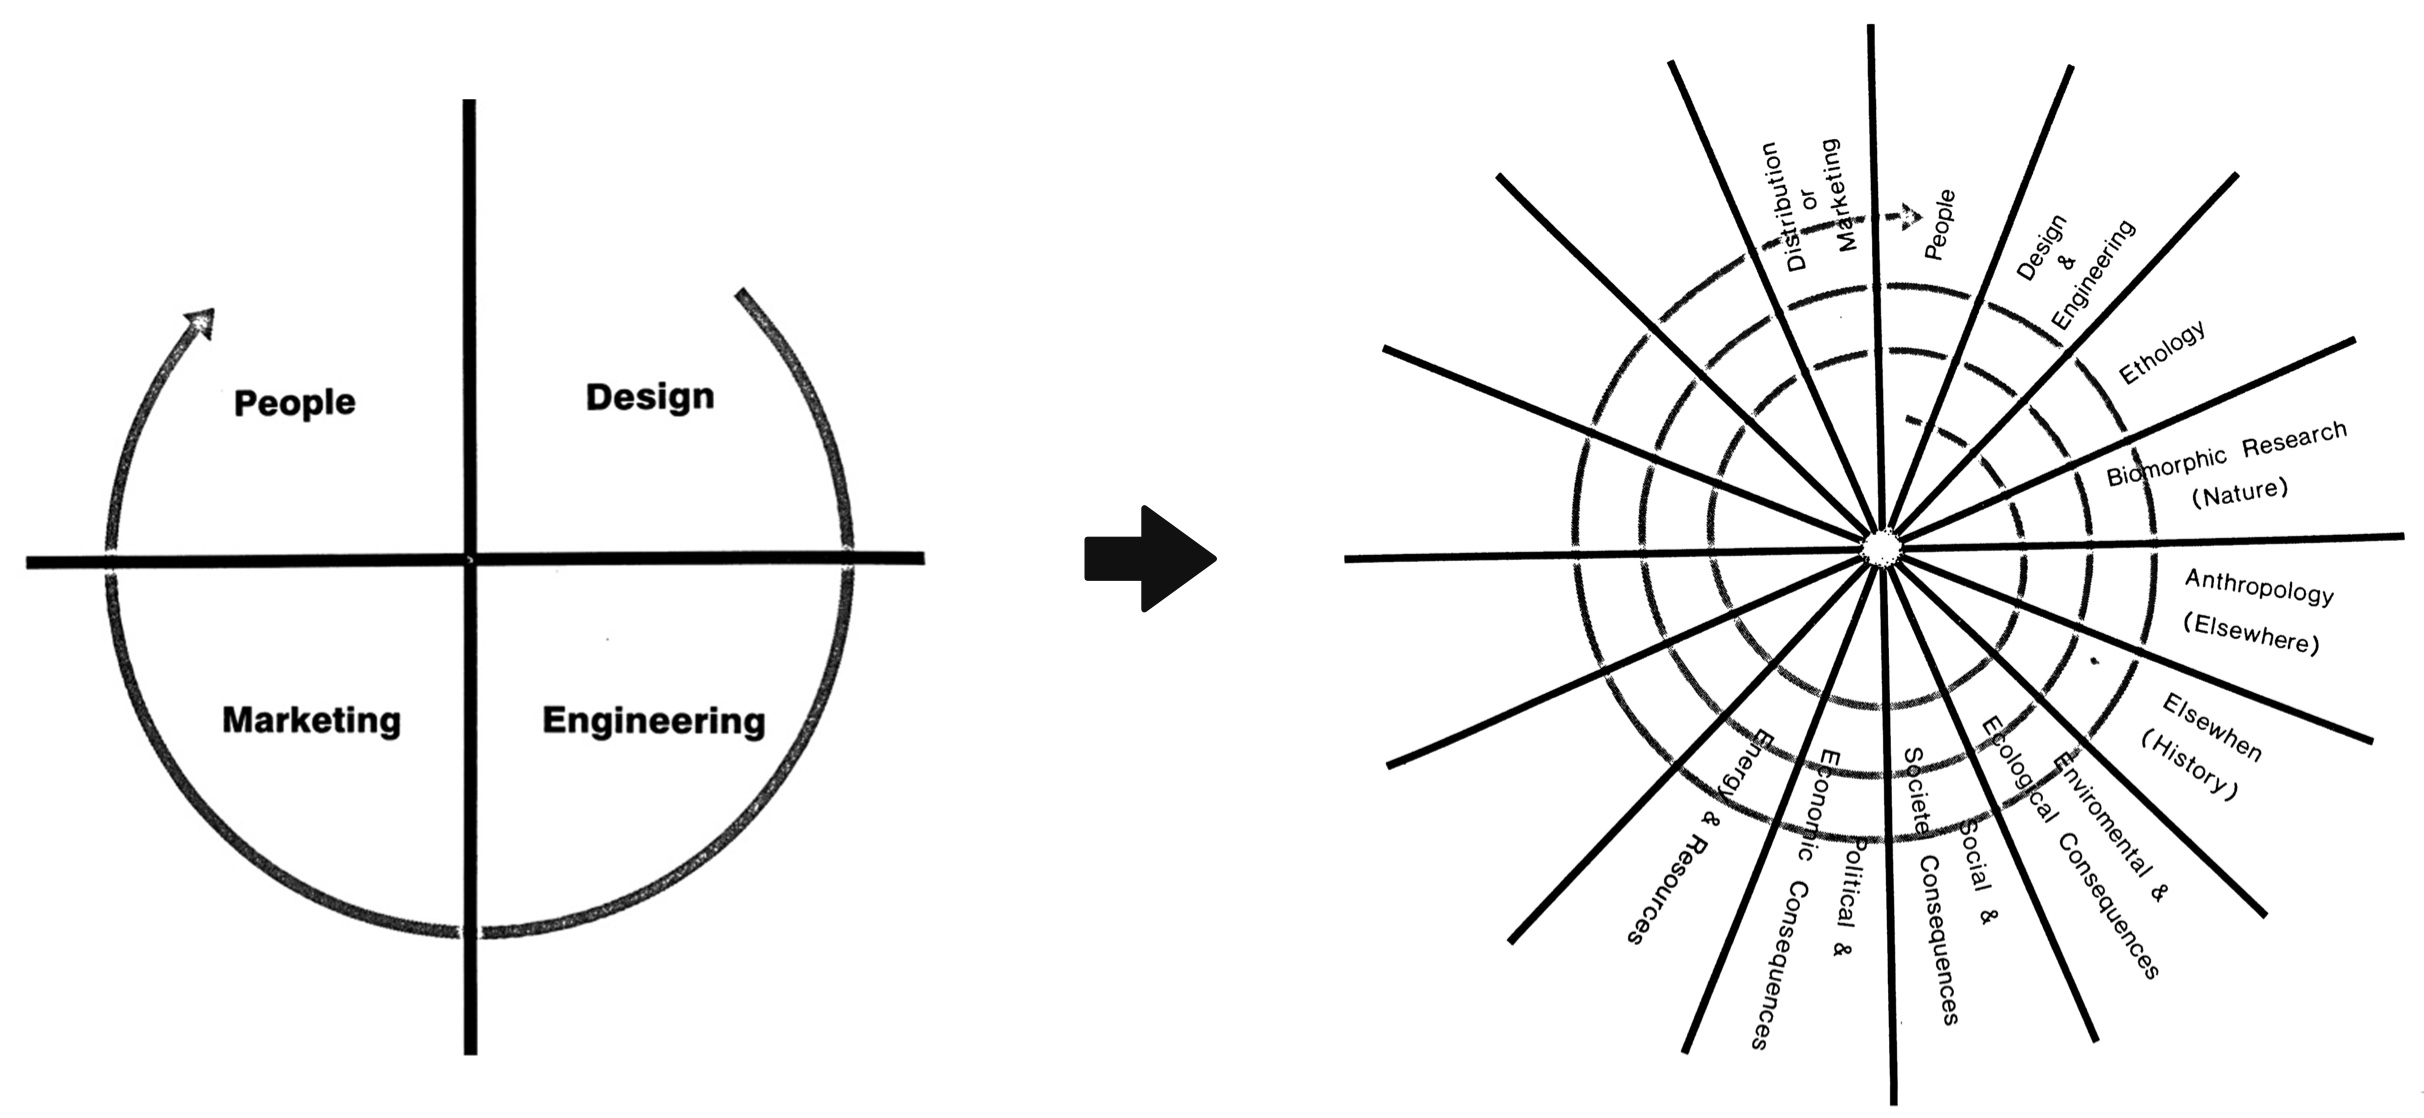 Design process flowchart. Adapted from Papanek (1983)